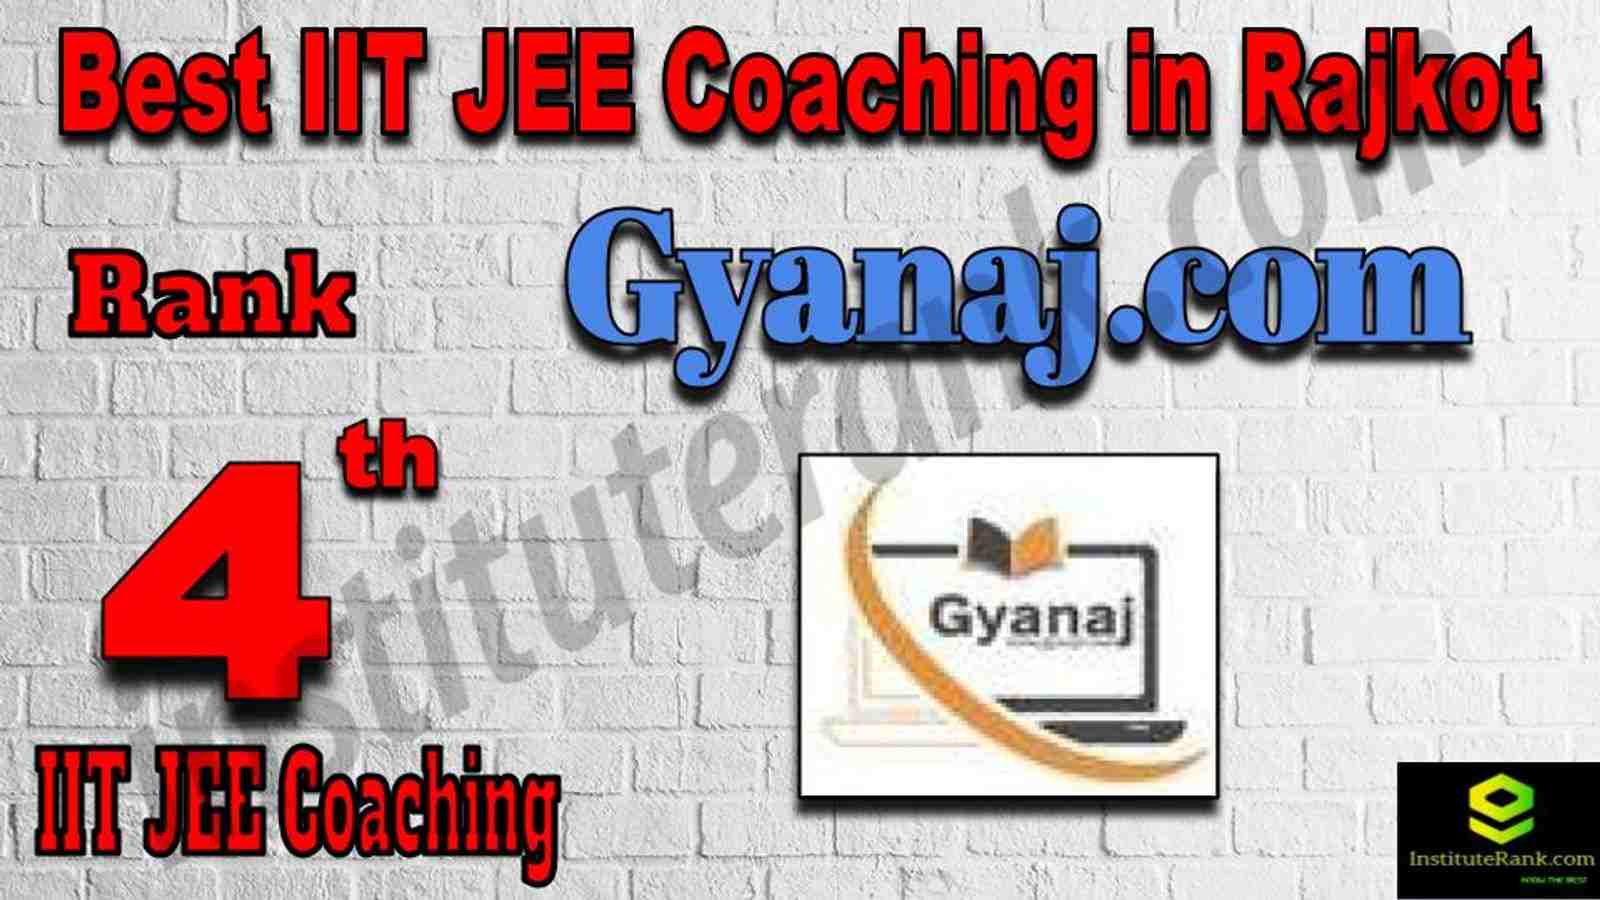 4th Best IIT JEE Coaching in Rajkot